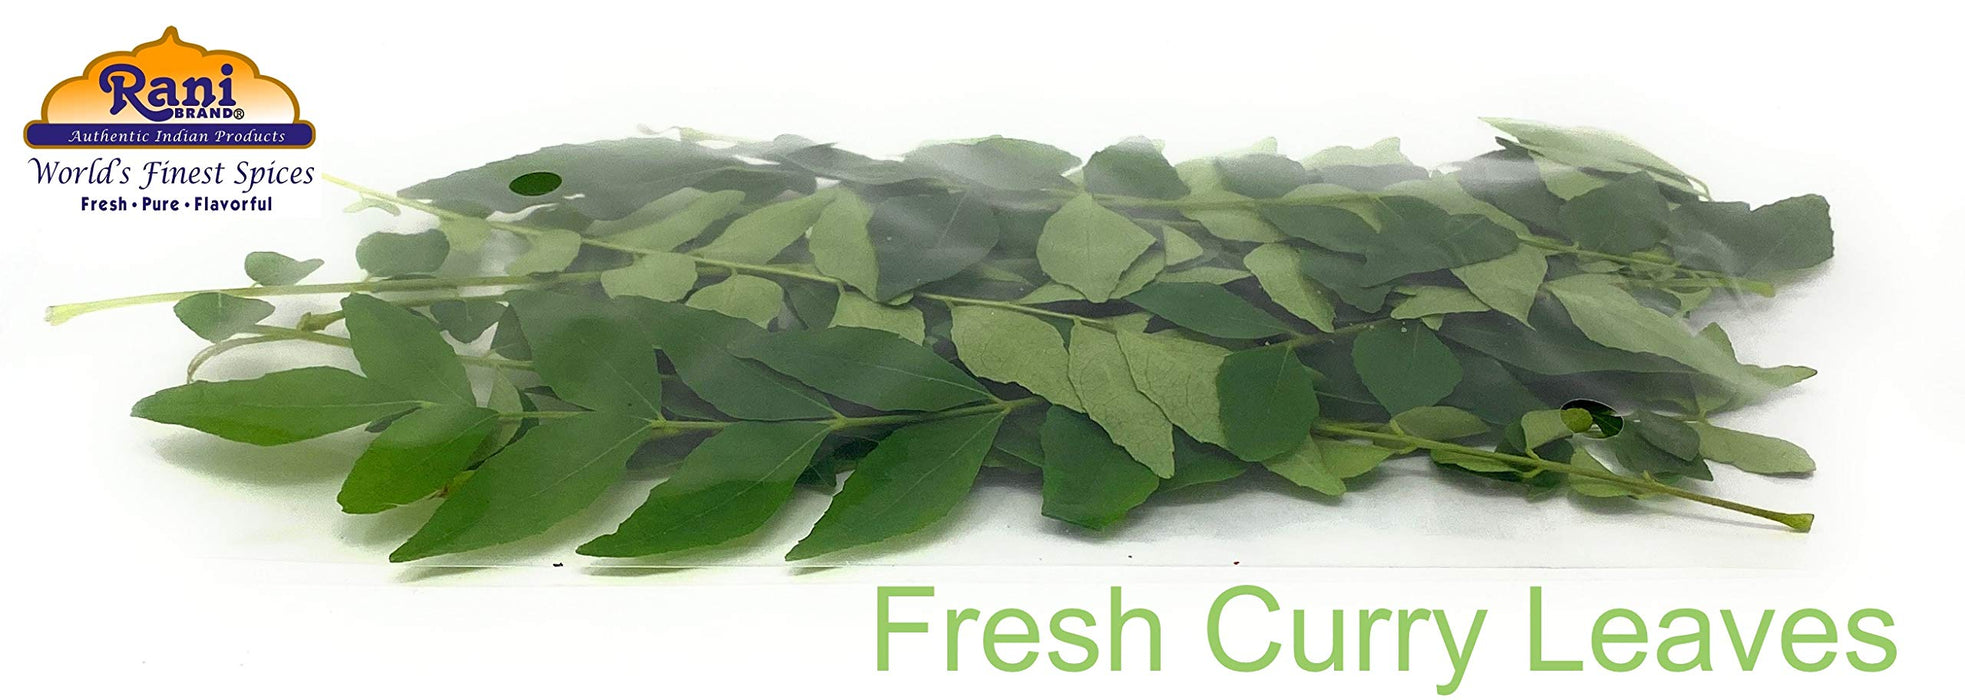 Rani Fresh Curry Leaves 1oz (28g) ~ All Natural | Vegan | Gluten Friendly | NON-GMO